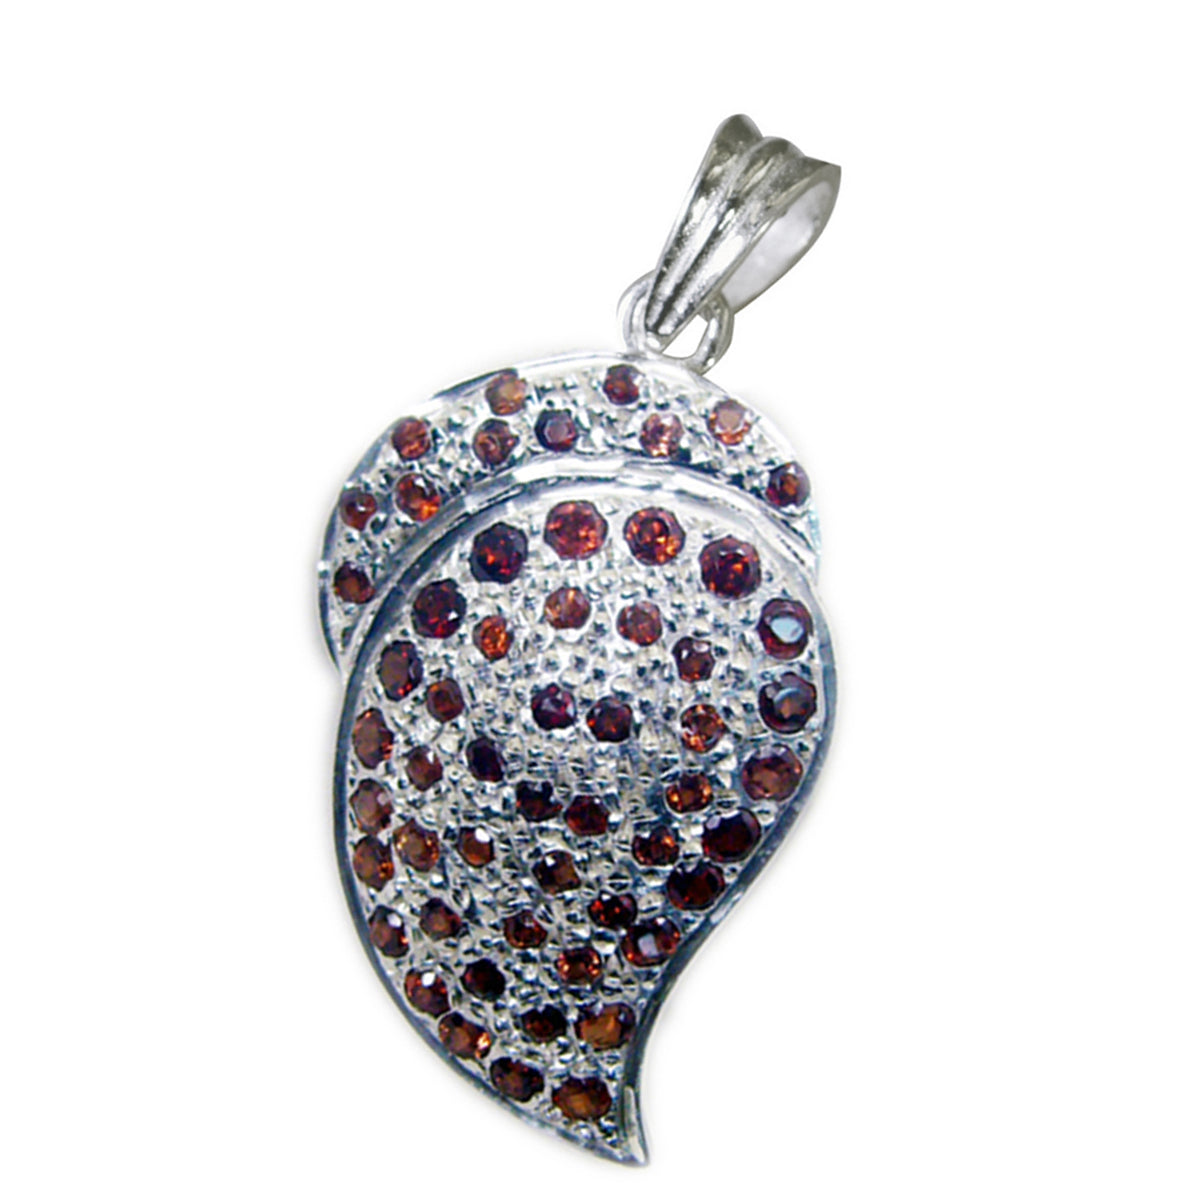 Riyo Stunning Gemstone Round Faceted Red Garnet 1106 Sterling Silver Pendant Gift For Good Friday